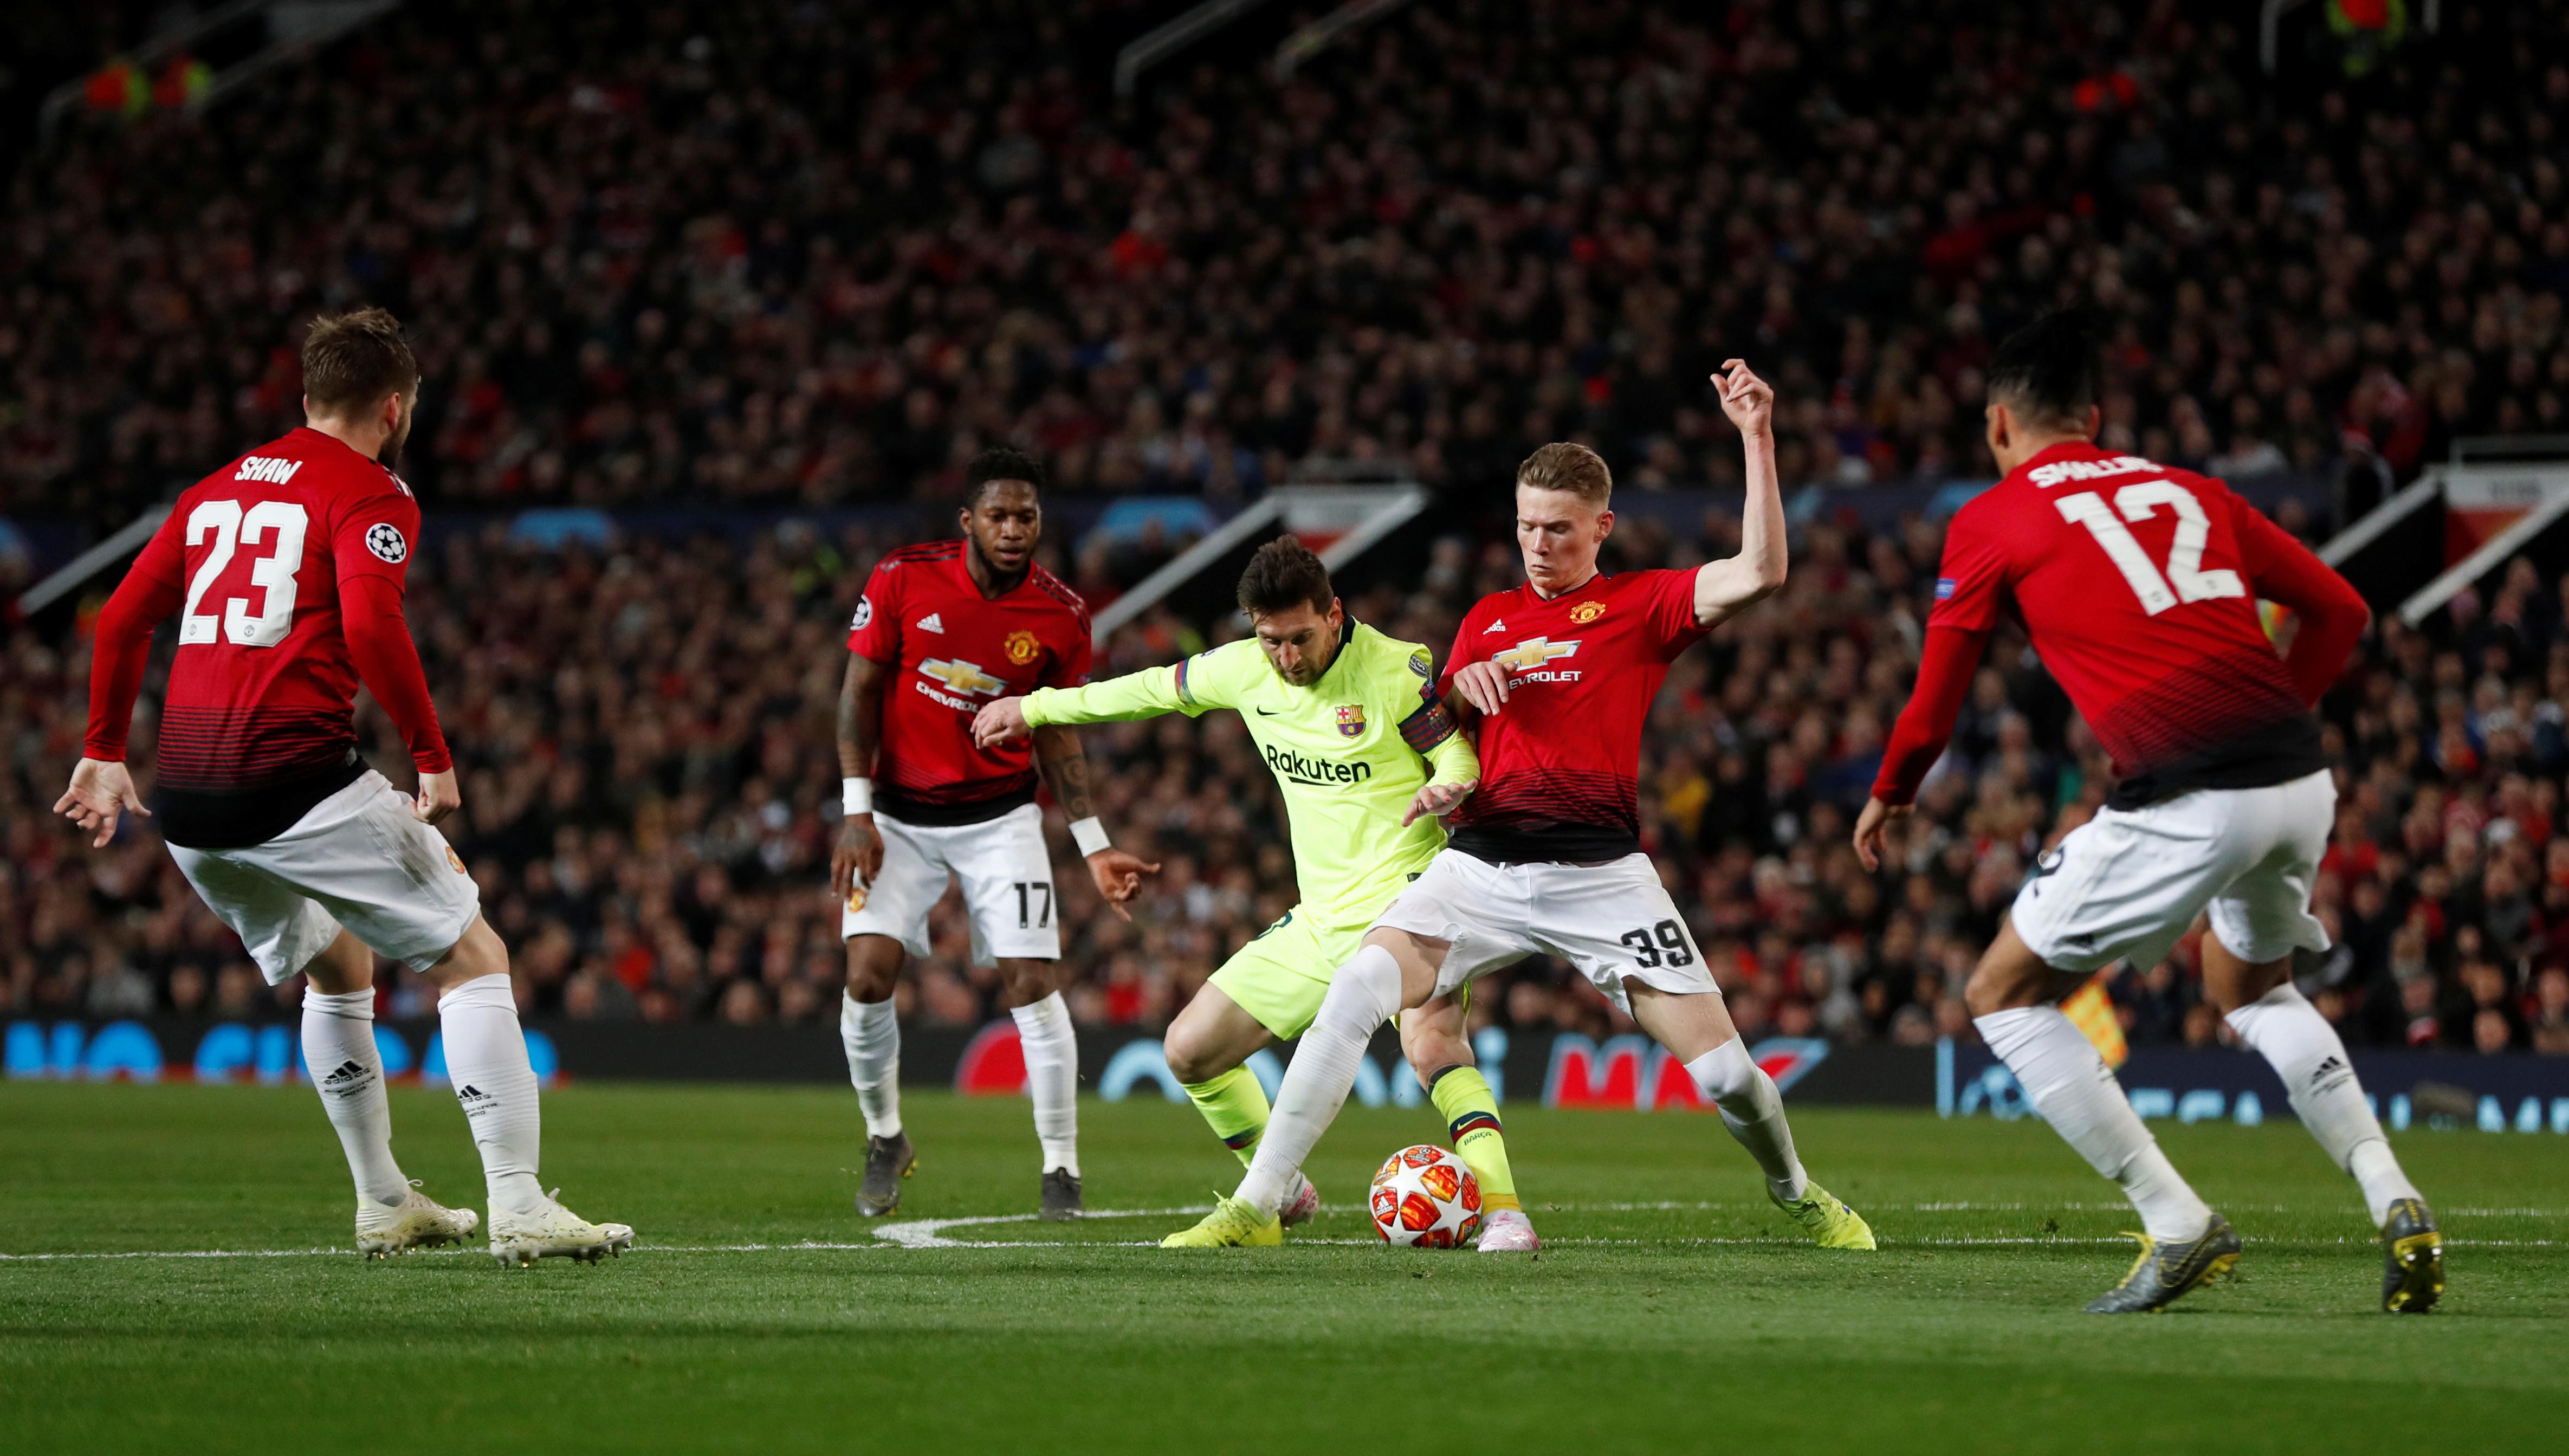 Match Preview: FC Barcelona vs Manchester United – utdreport